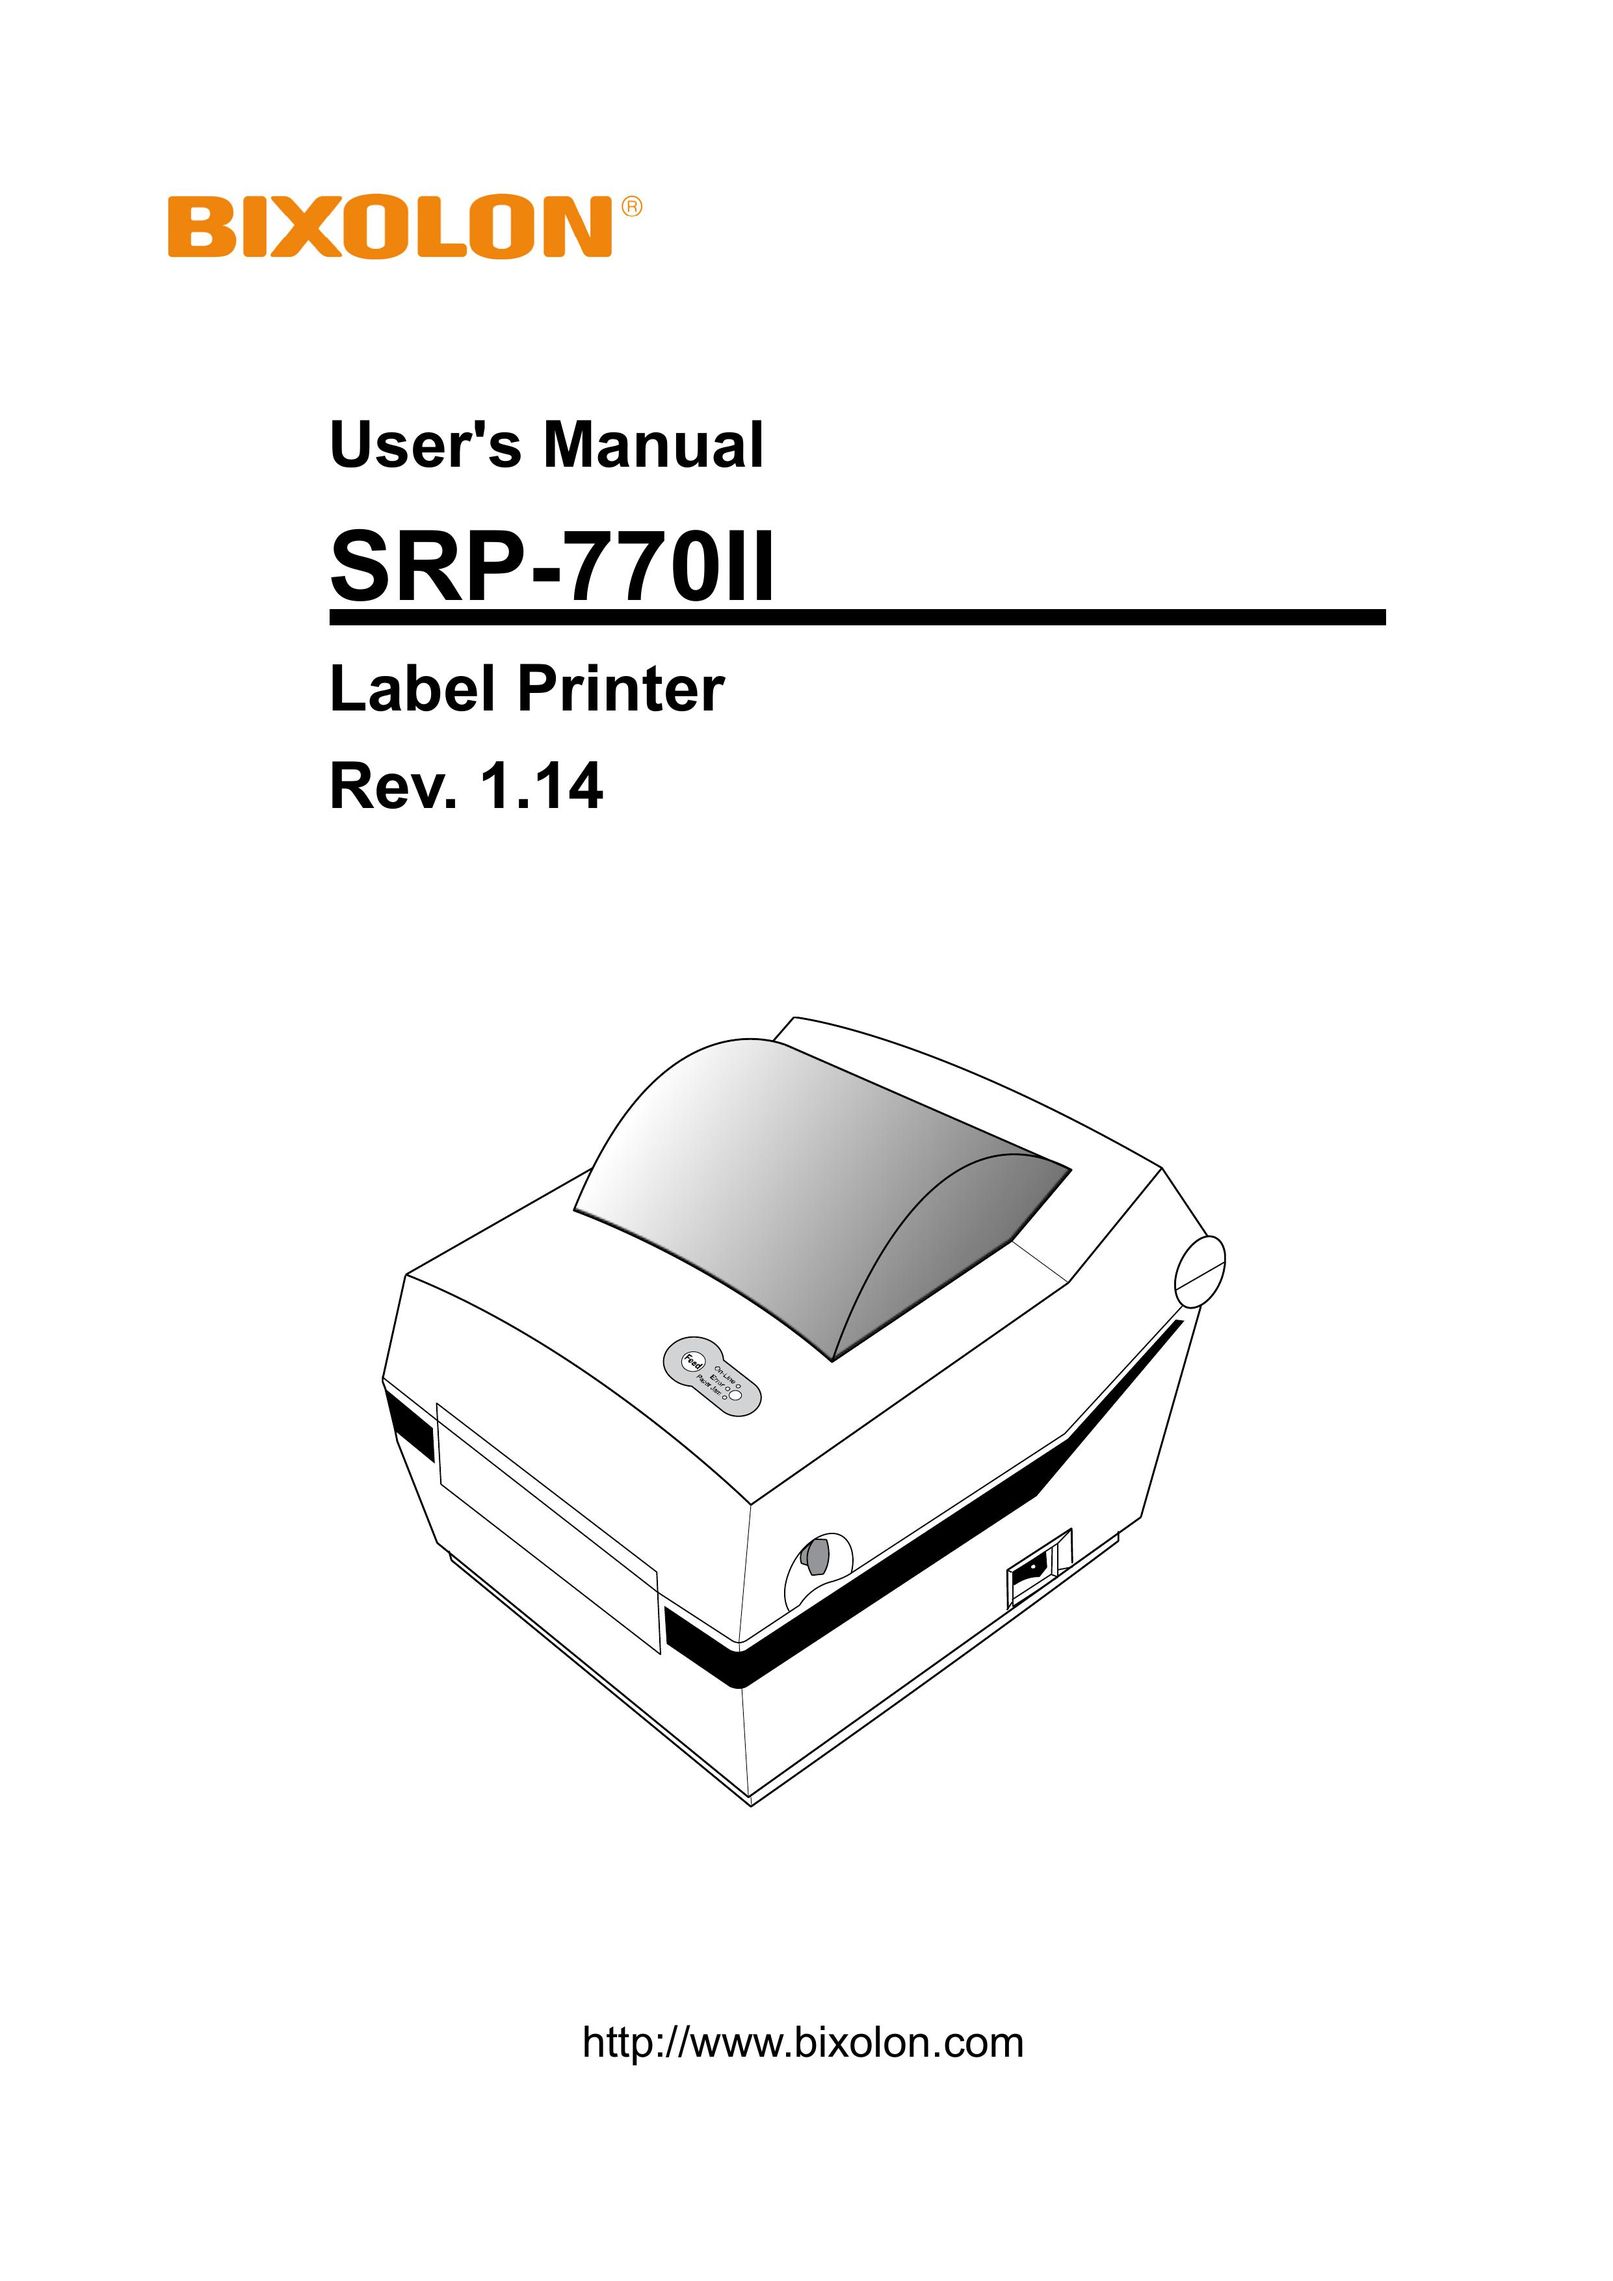 BIXOLON SRP-770II Label Maker User Manual